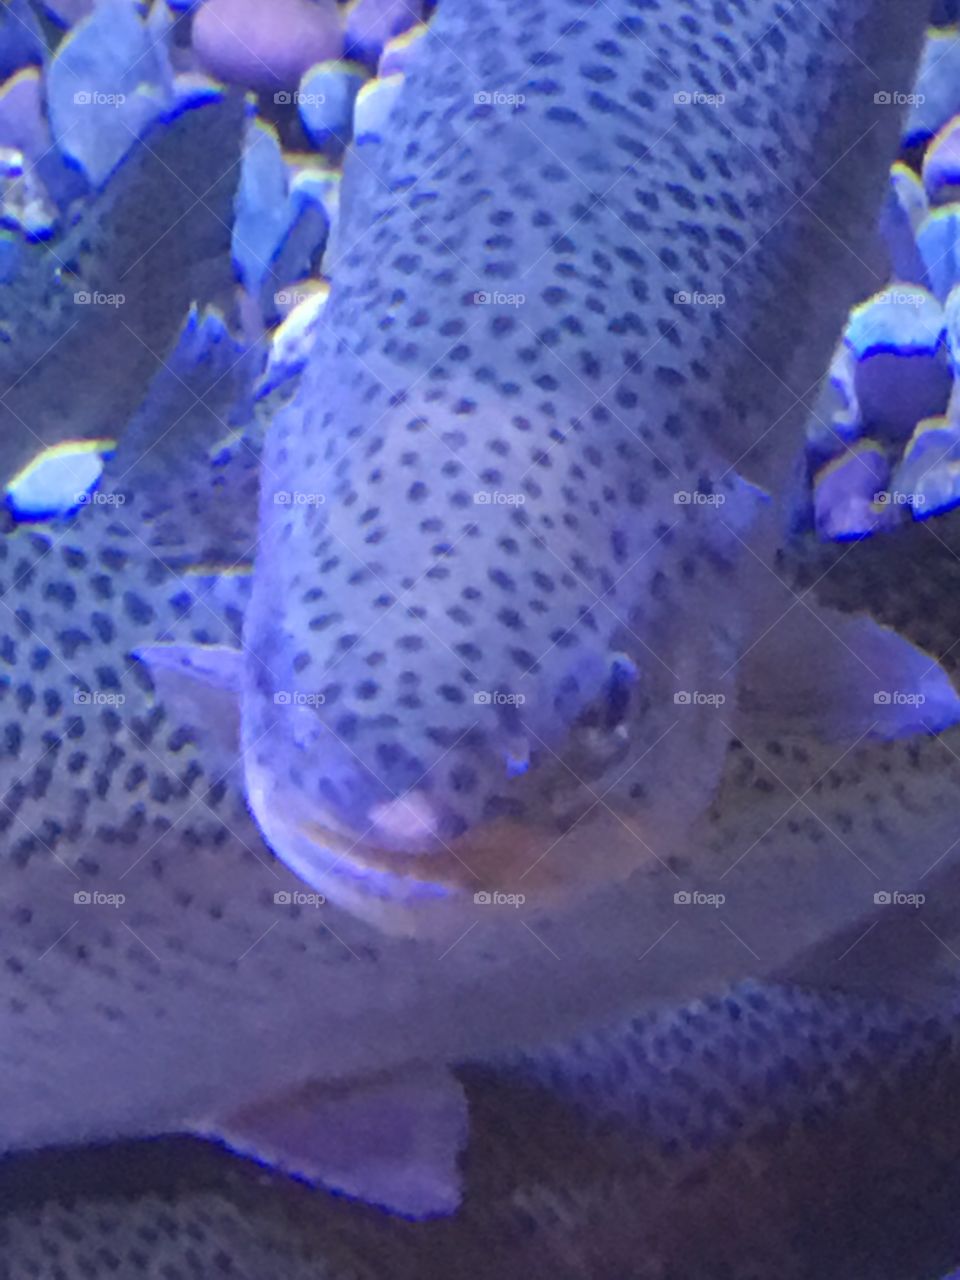 Bass fish in an aquarium in Montana area